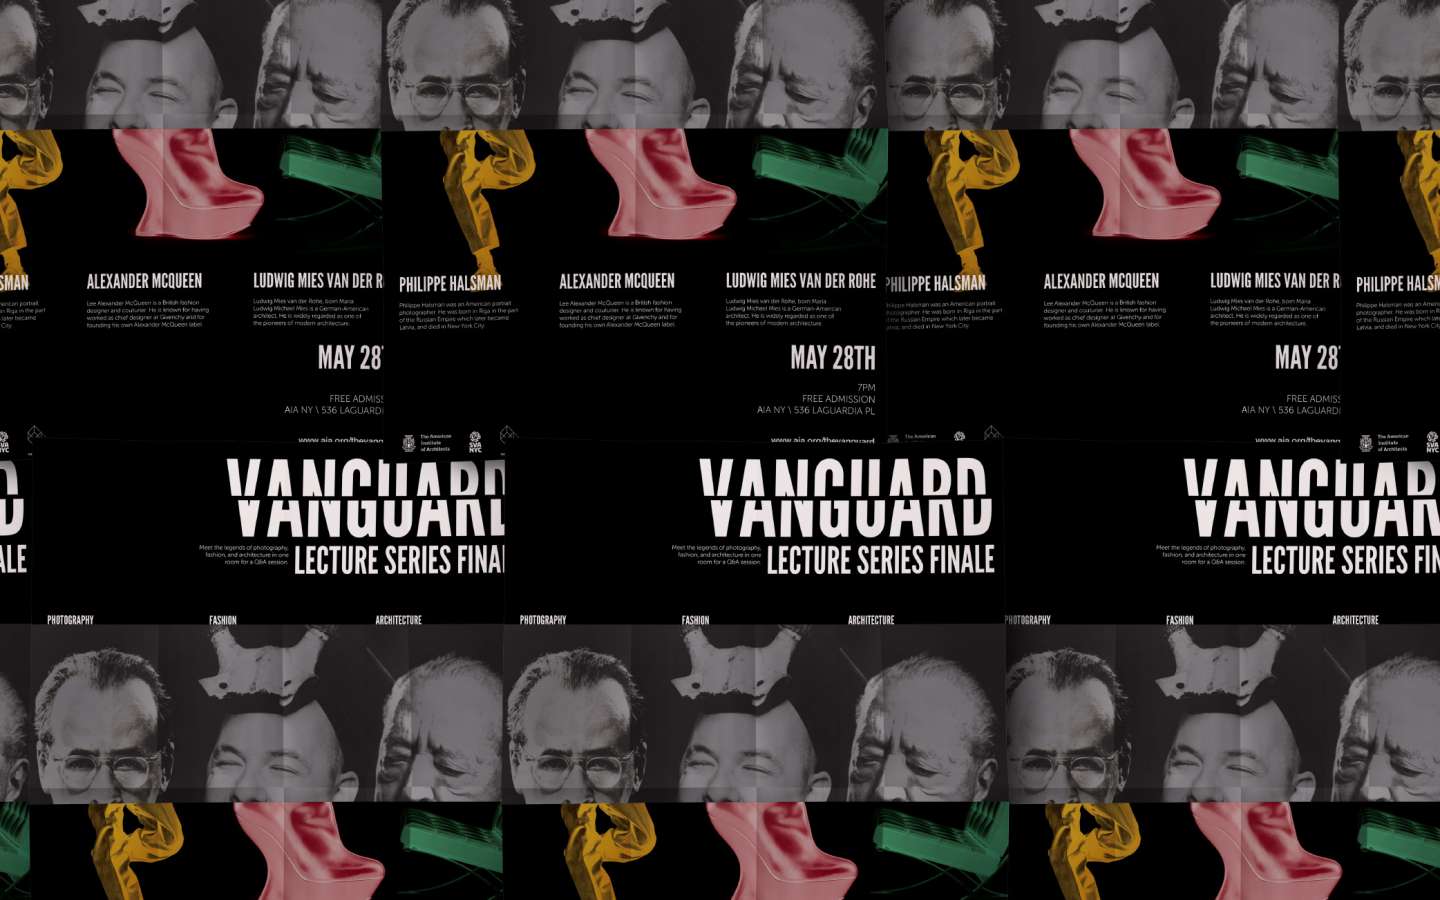 Vanguard Lecture Series